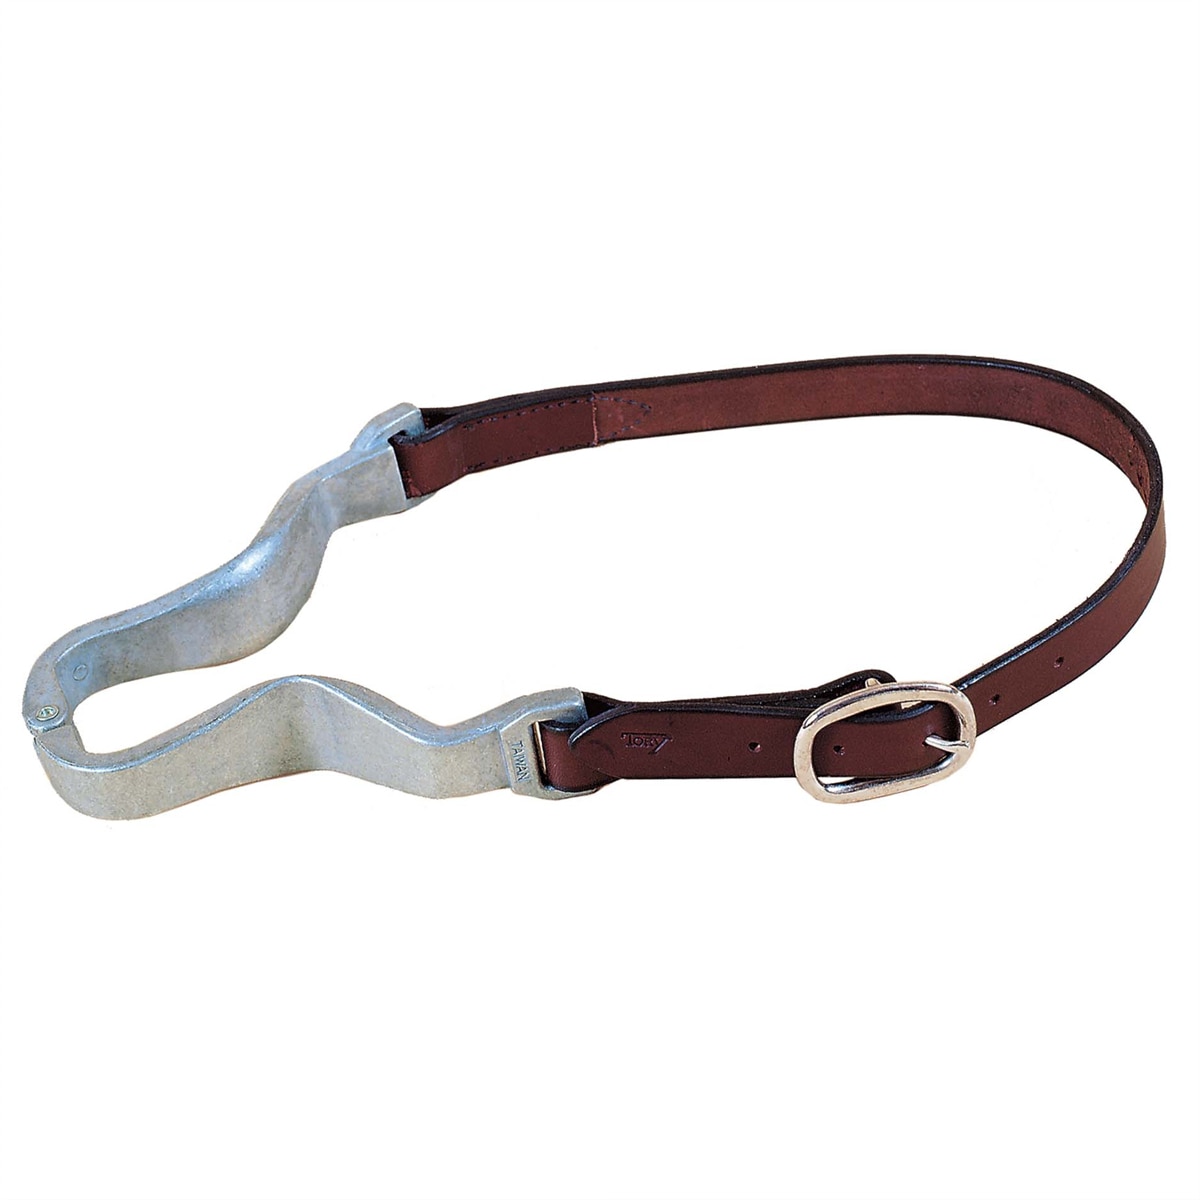 Tough-1 Aluminum Hinge Cribbing Collar for Horses with Nylon Strap Black